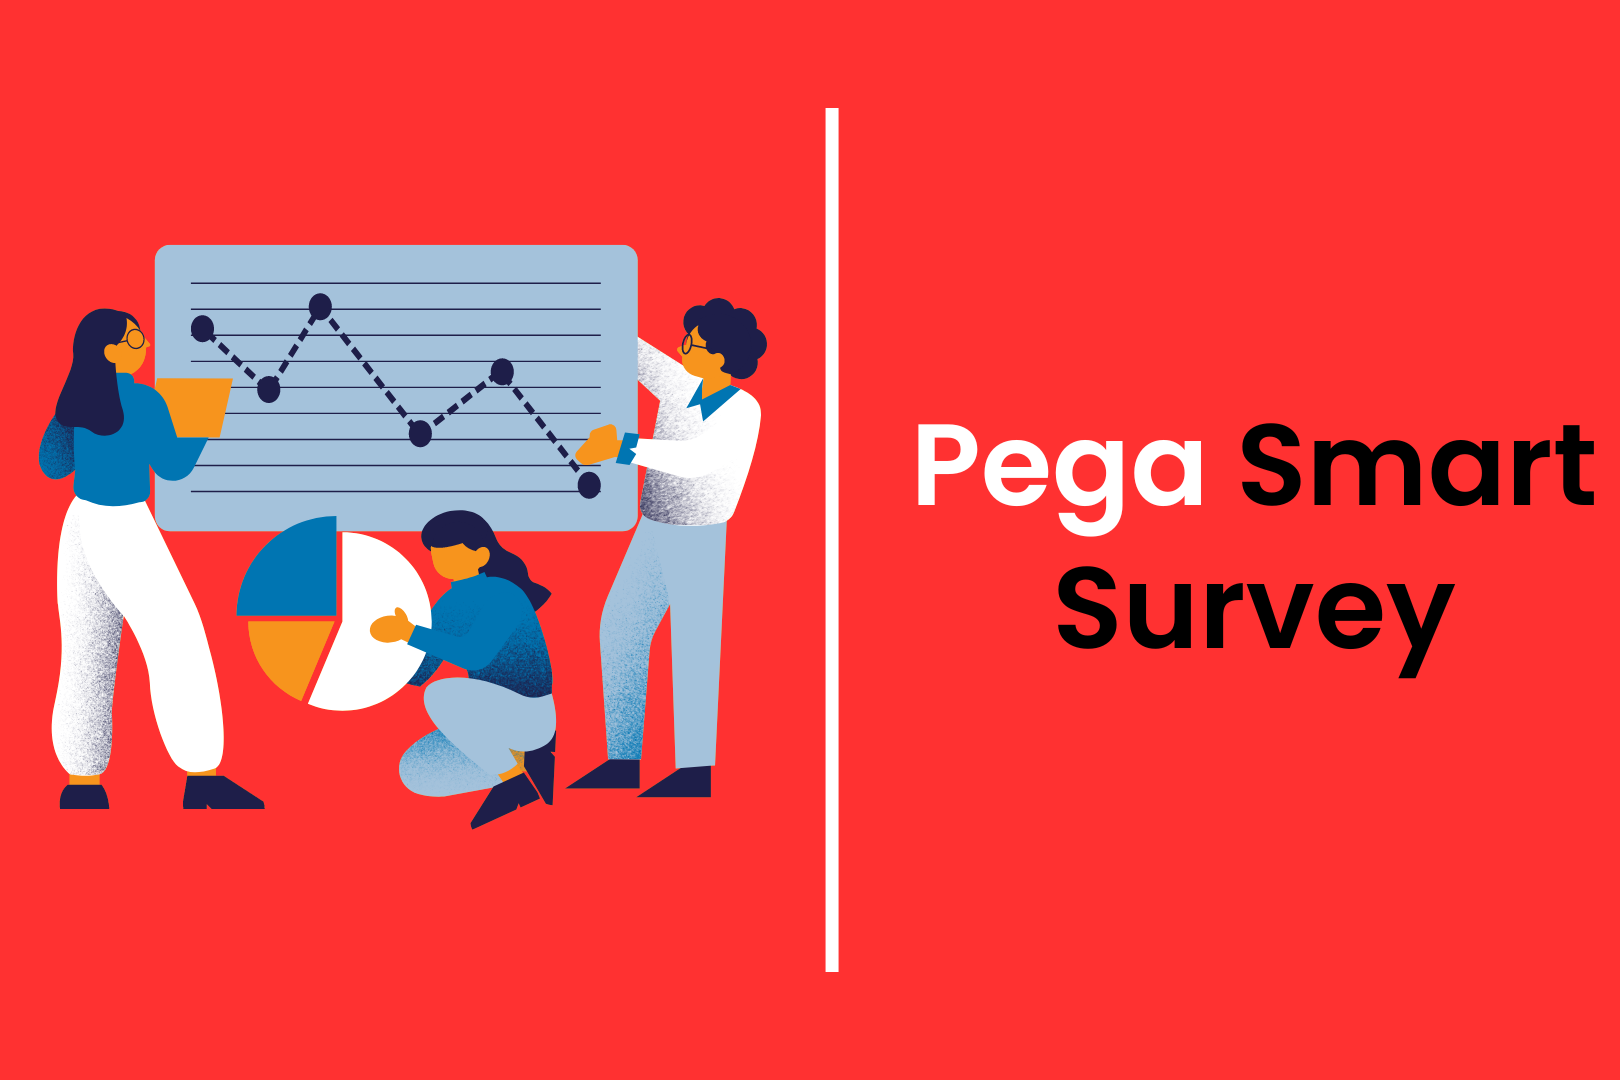 Pega Smart Survey